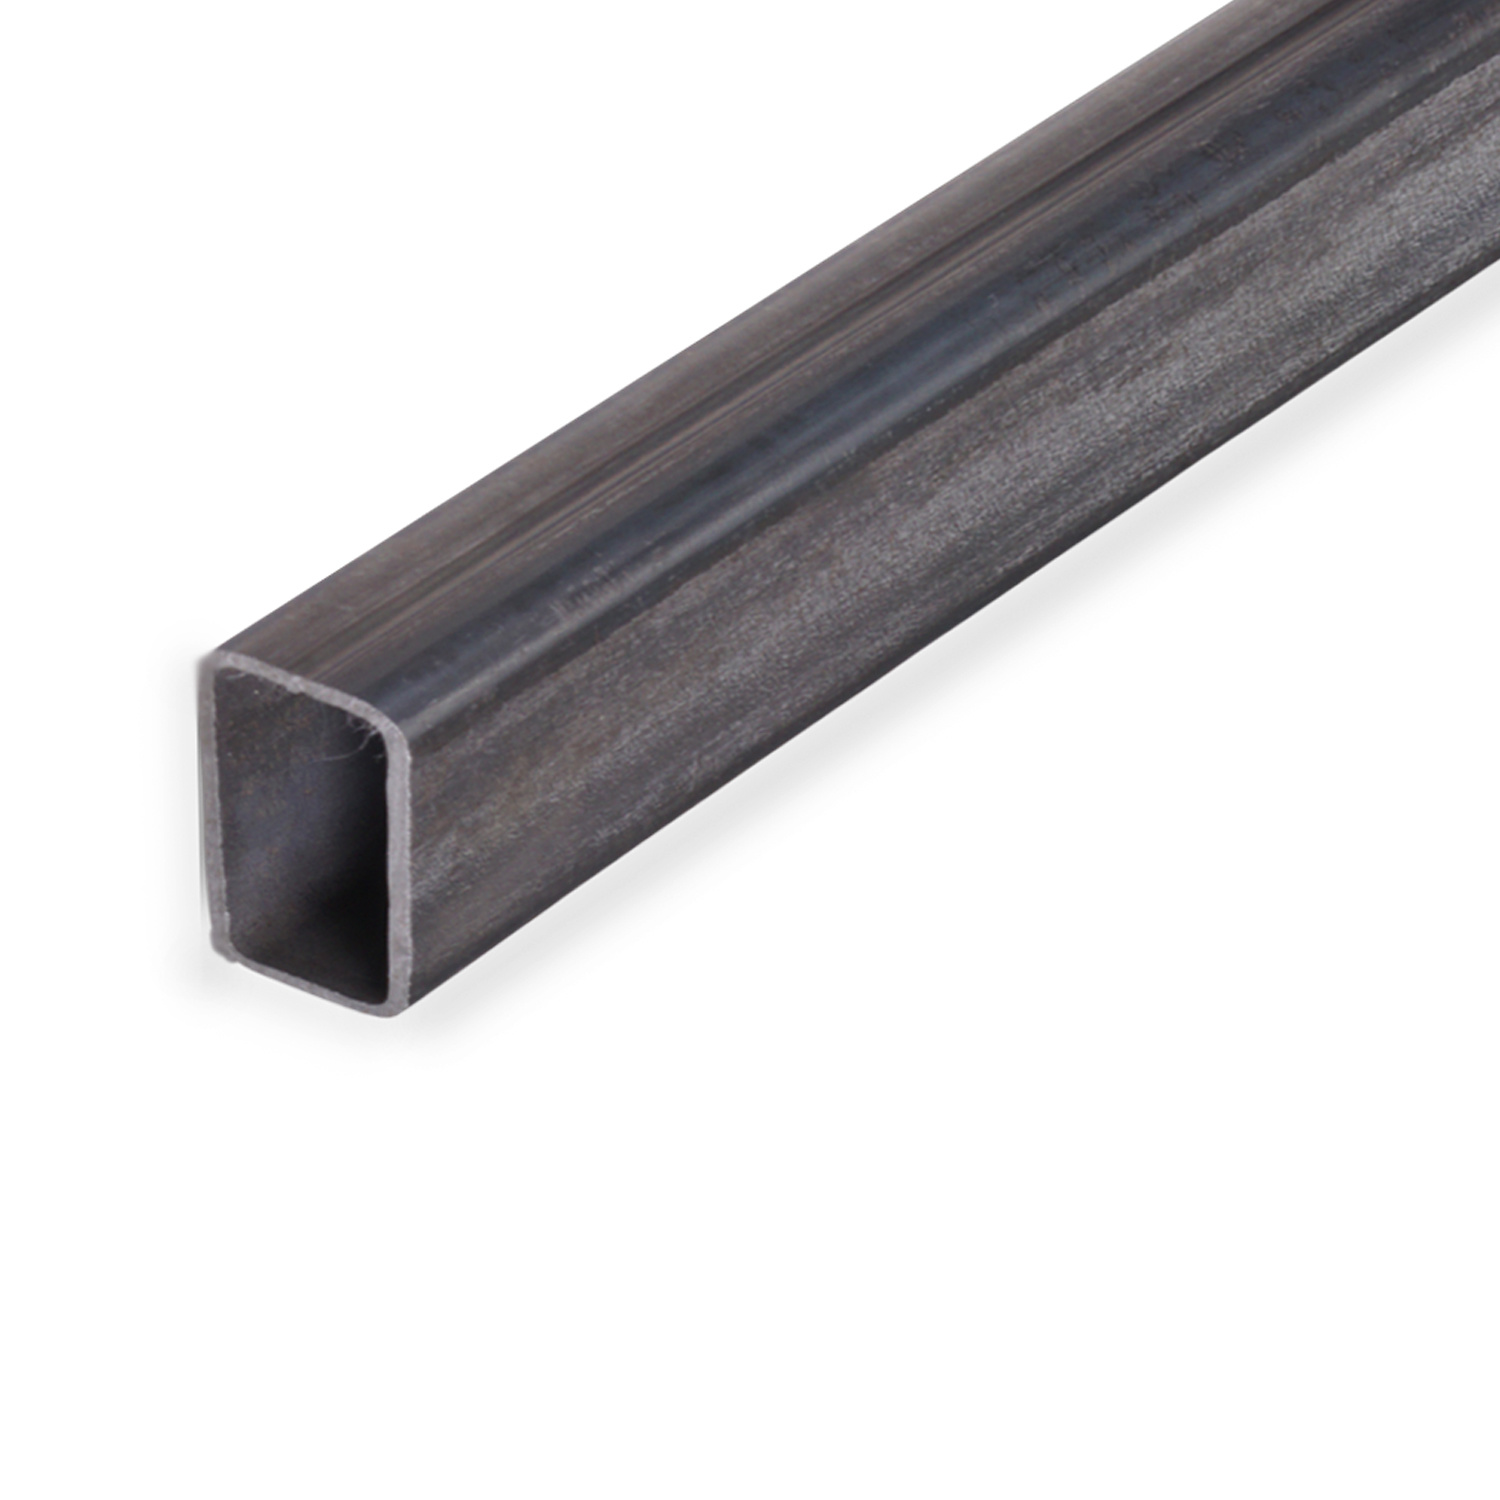  Koker staal - rechthoekige buis kokerprofiel KGV staal - S235JR - 60x30x3 MM